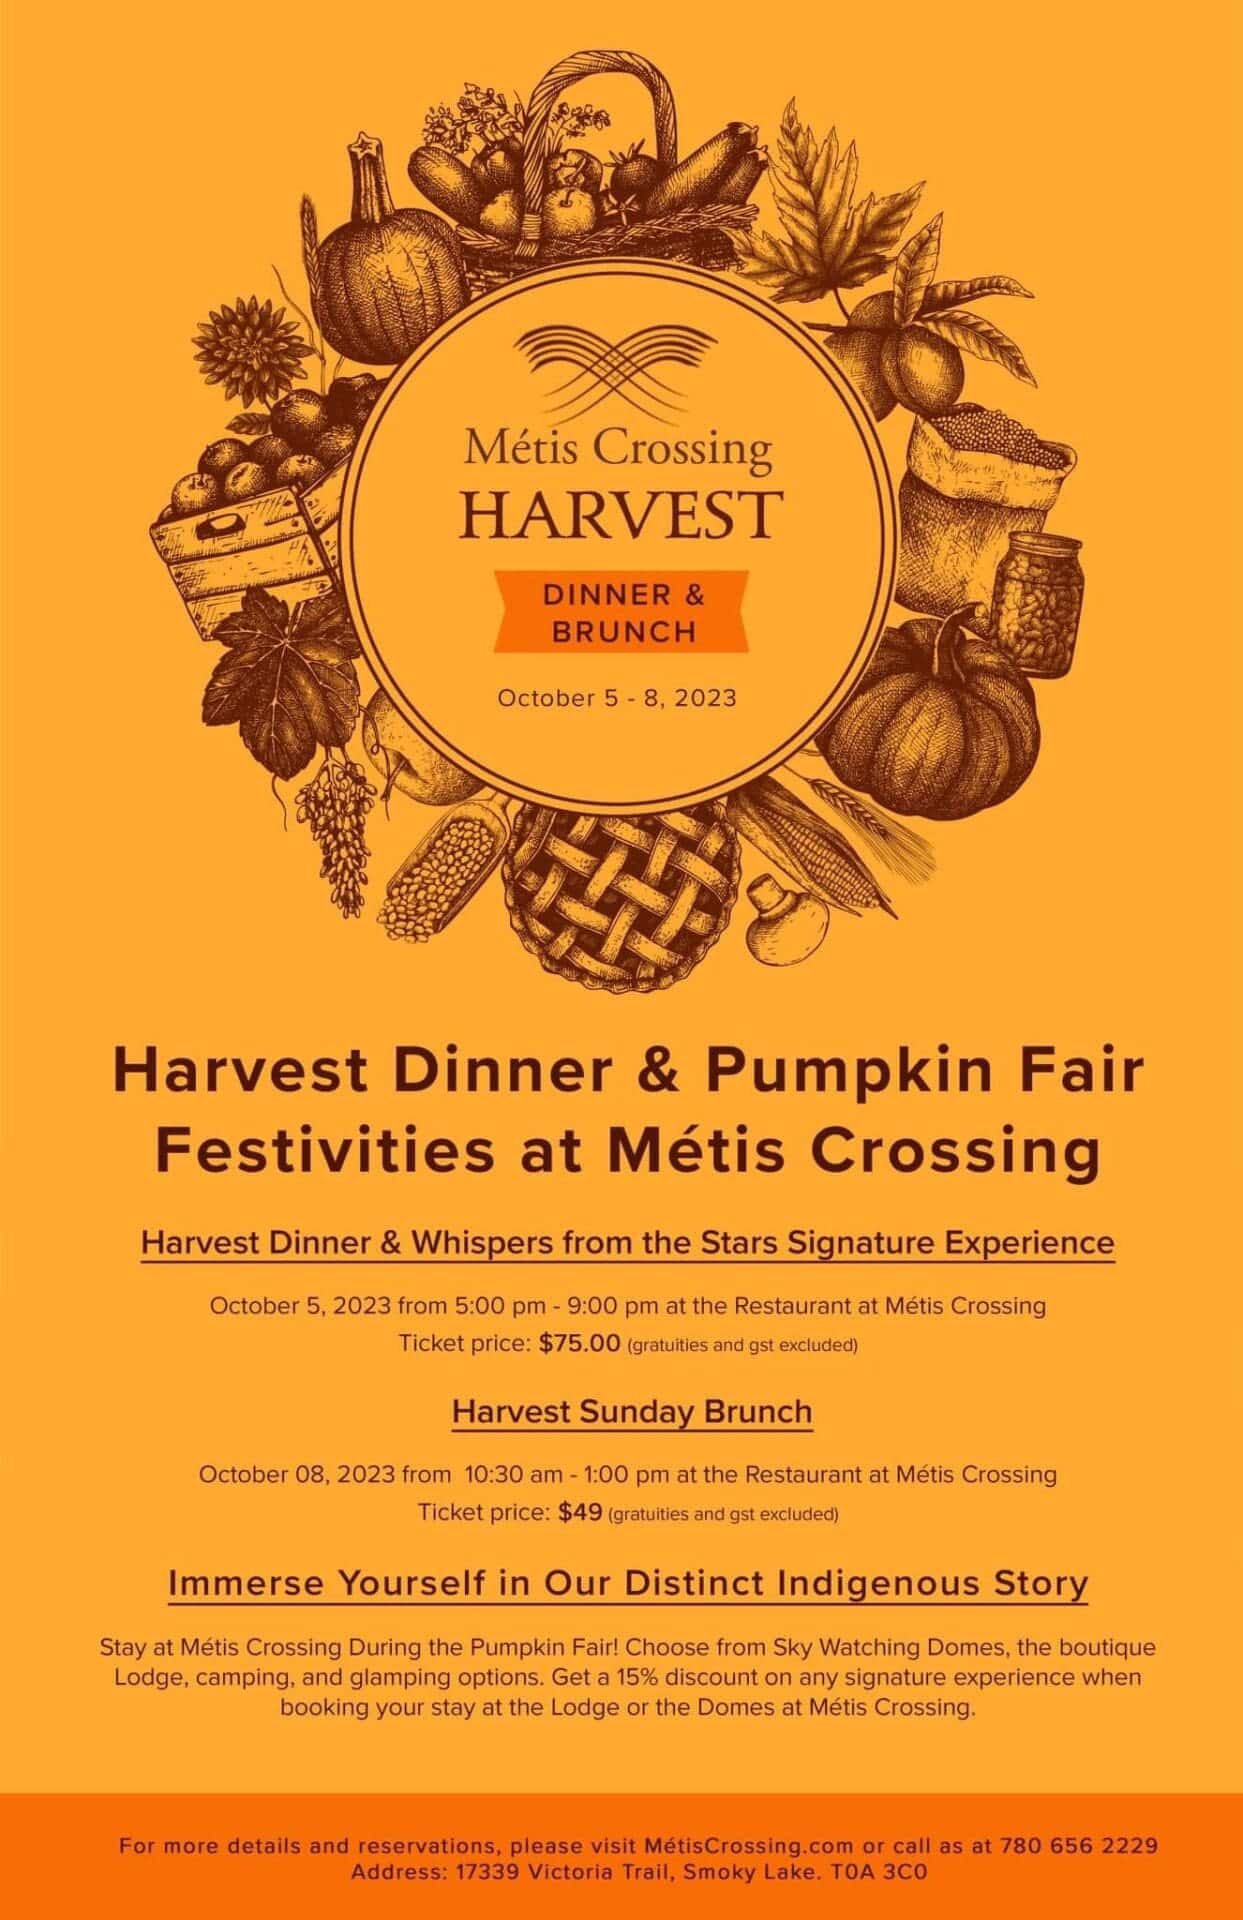 Metis Crossing Harvest Dinner and Brunch